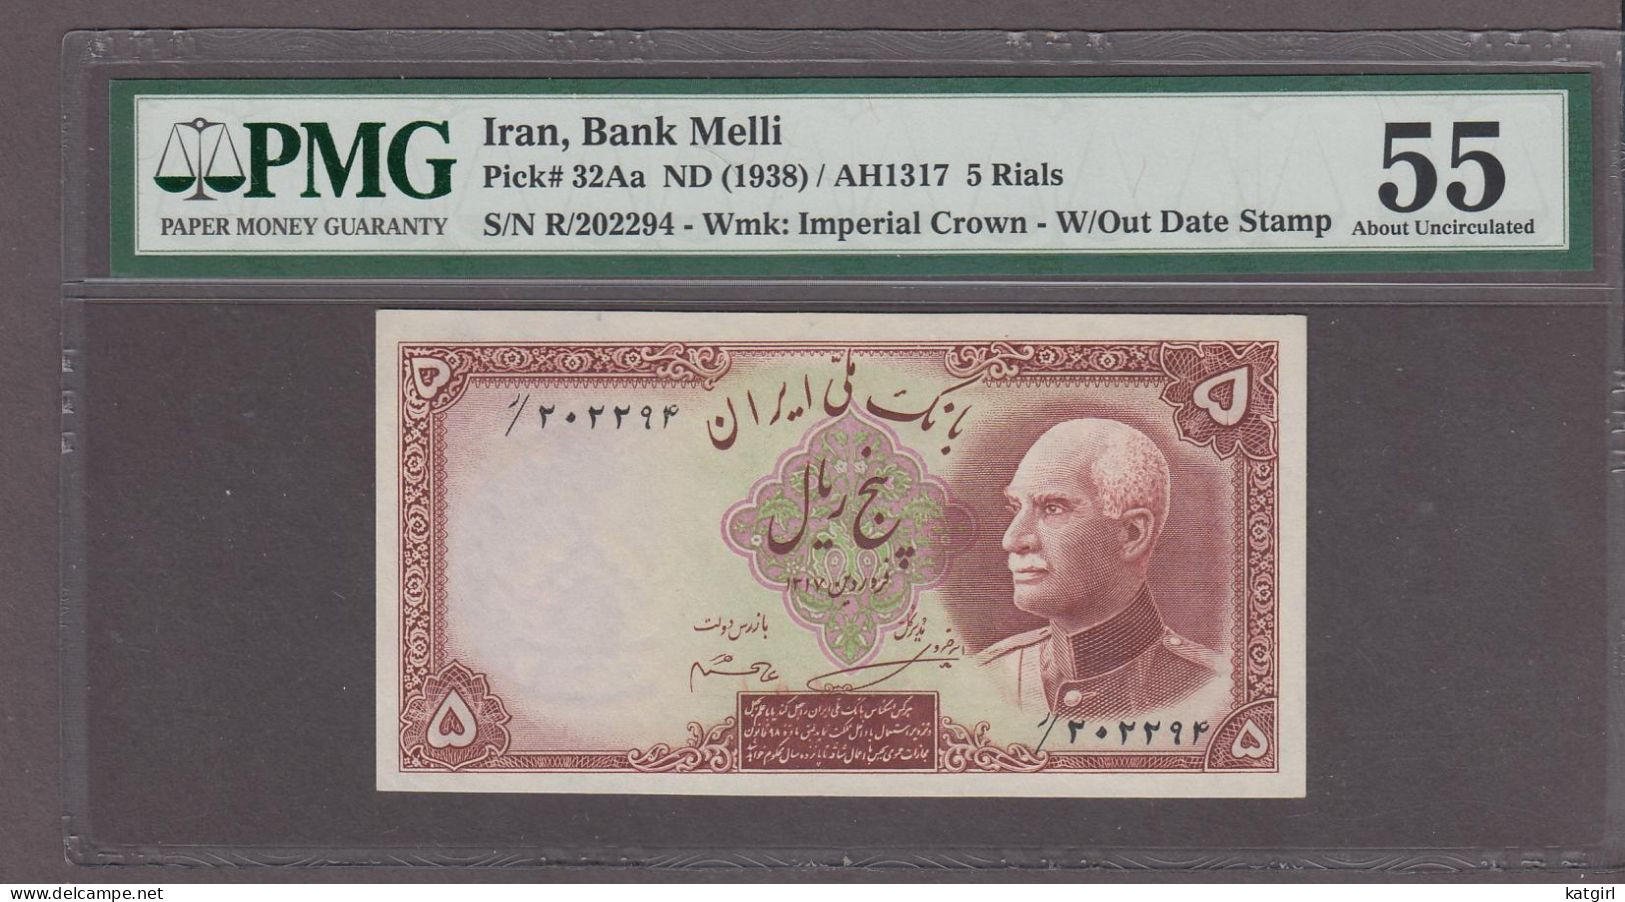 Iran, Bank Melli 5 Rials Banknote Pick# 32Aa ND (1938) / AH1317 AUNC PMG 55 - Iran